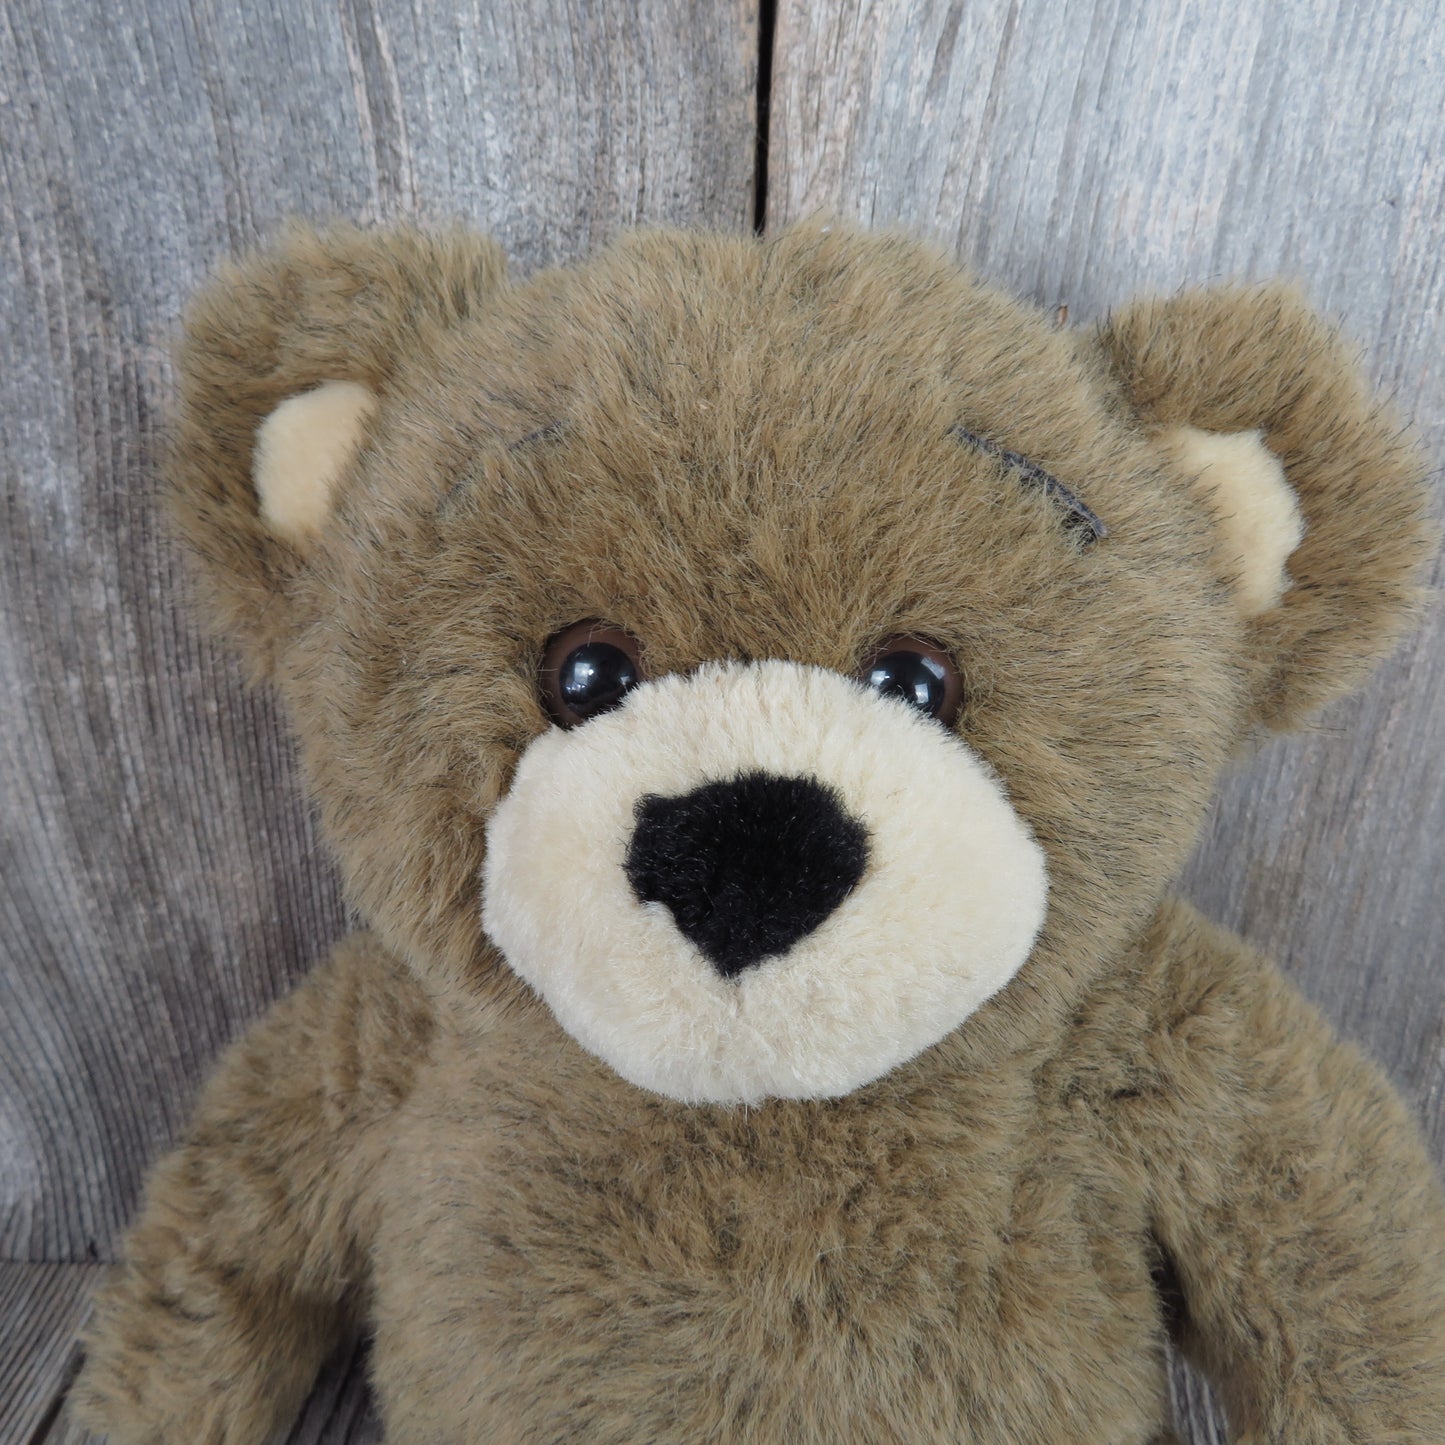 Vintage Teddy Bear Bearemy Plush Build A Bear Brown BAB 1999 Mascott Foot Pads Stuffed Animal - At Grandma's Table